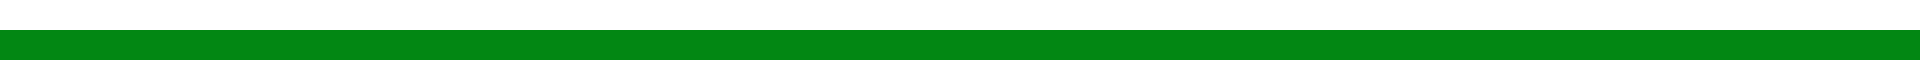 Flagge Freistaat Sachsen